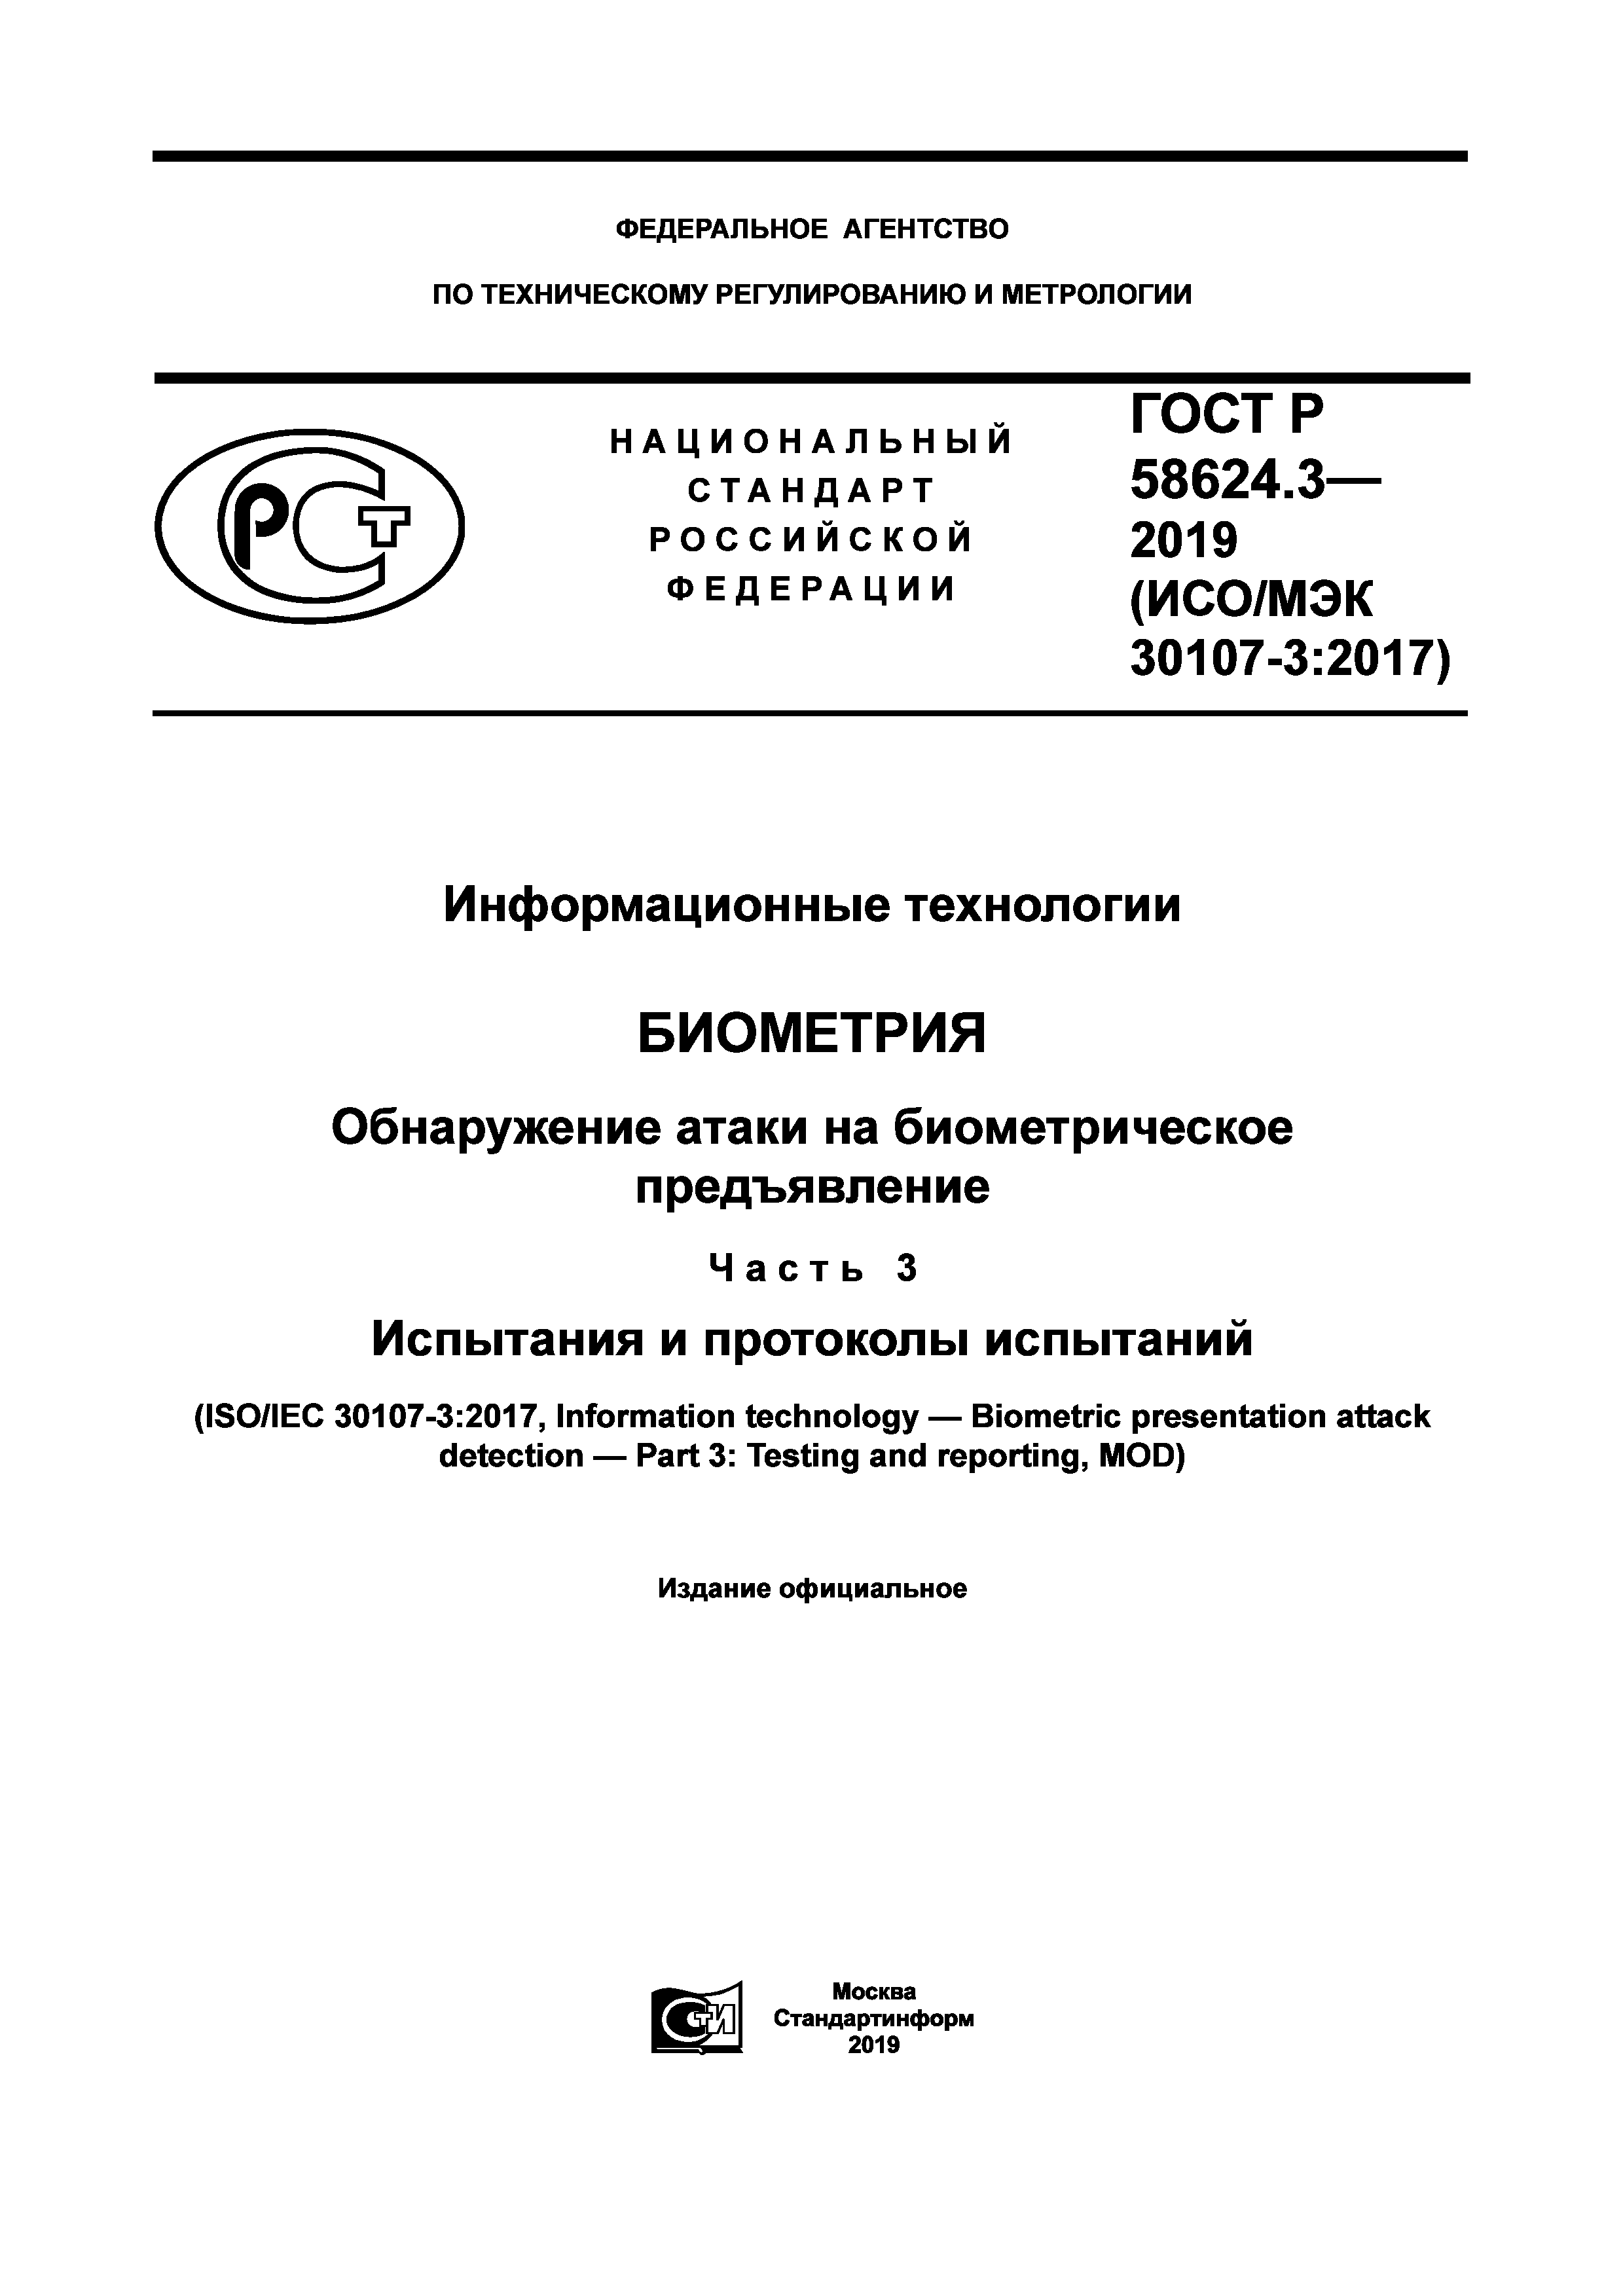 ГОСТ Р 58624.3-2019